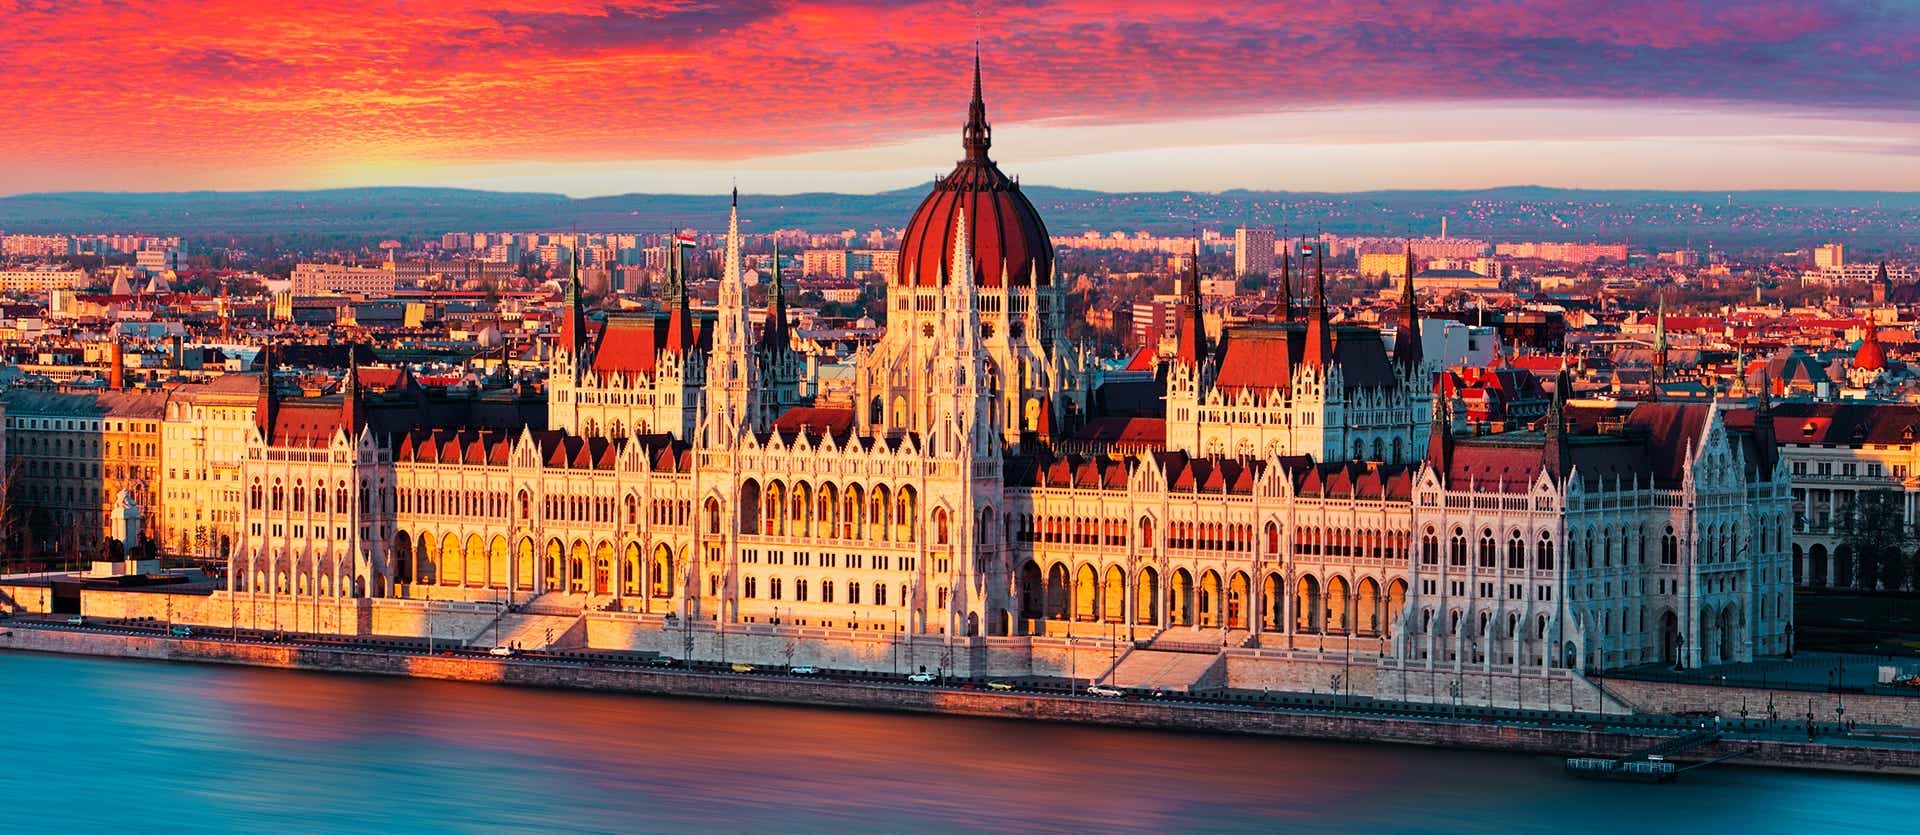 Parliament Building  <span class="iconos separador"></span> Budapest  <span class="iconos separador"></span> Hungary